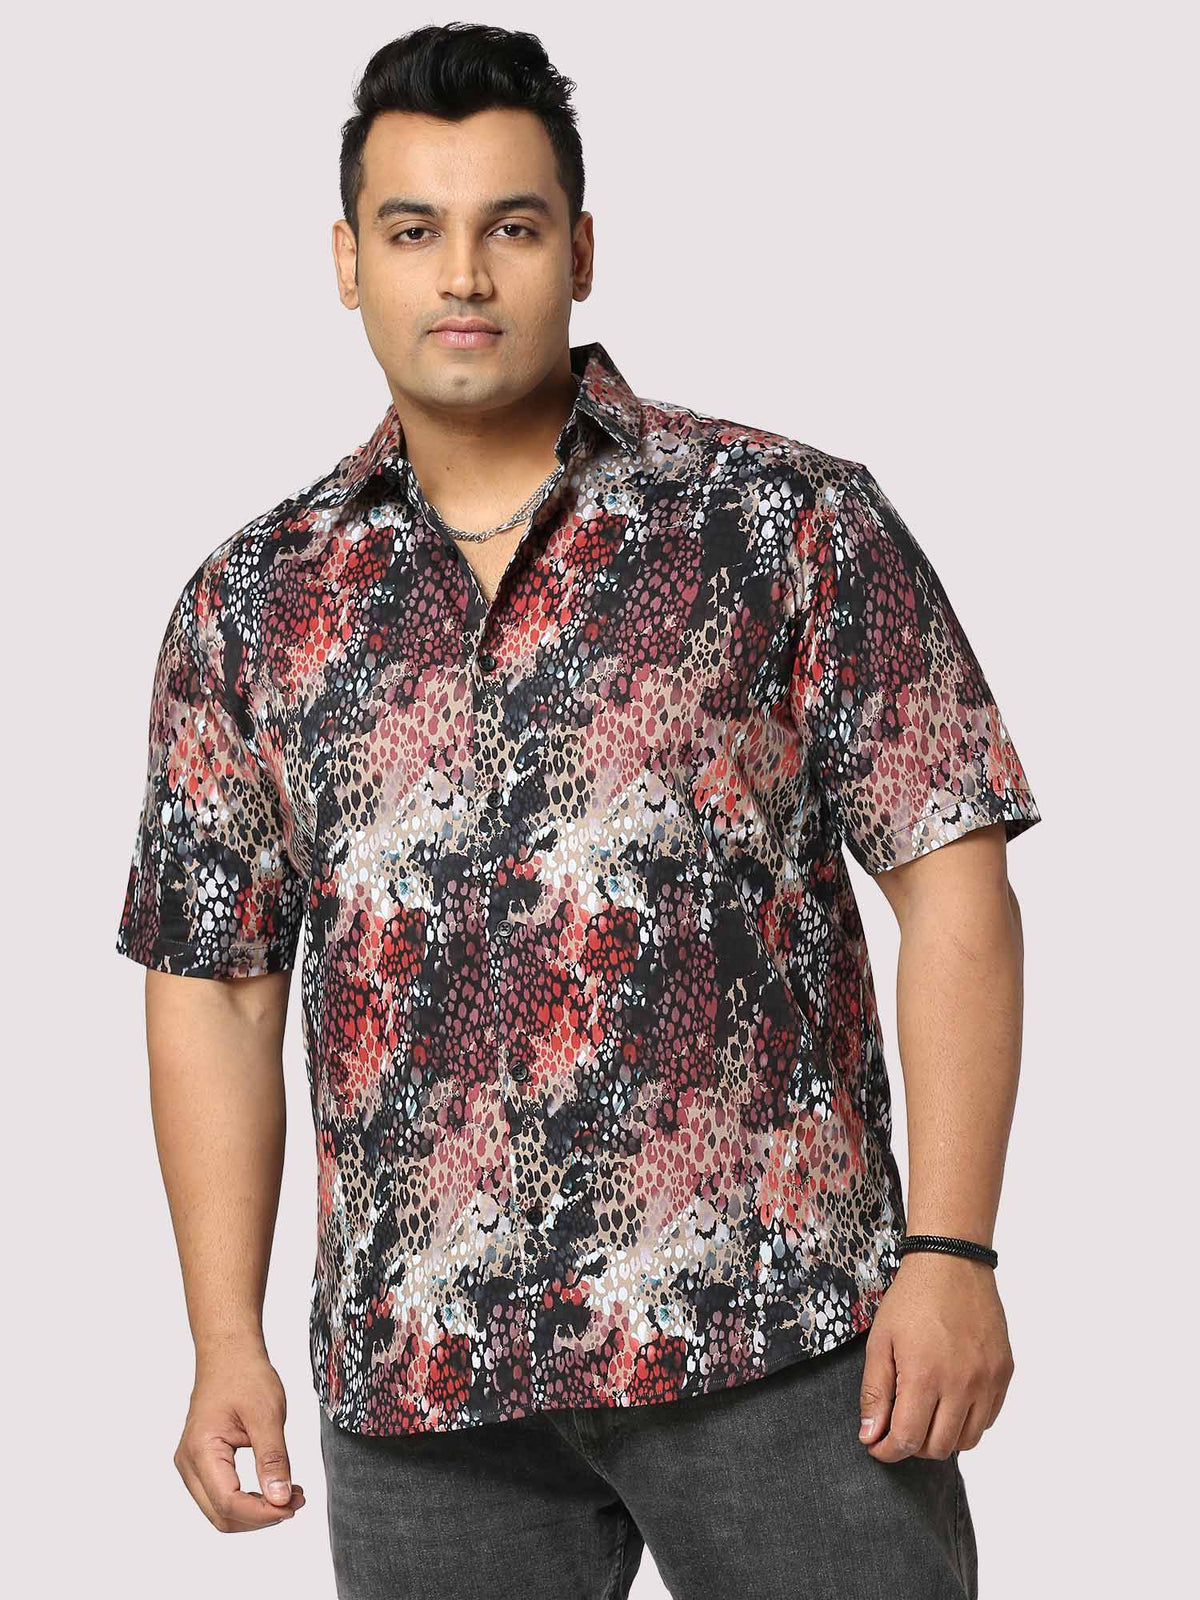 Disco Dots Digital Printed Half Shirt Men's Plus Size - Guniaa Fashions